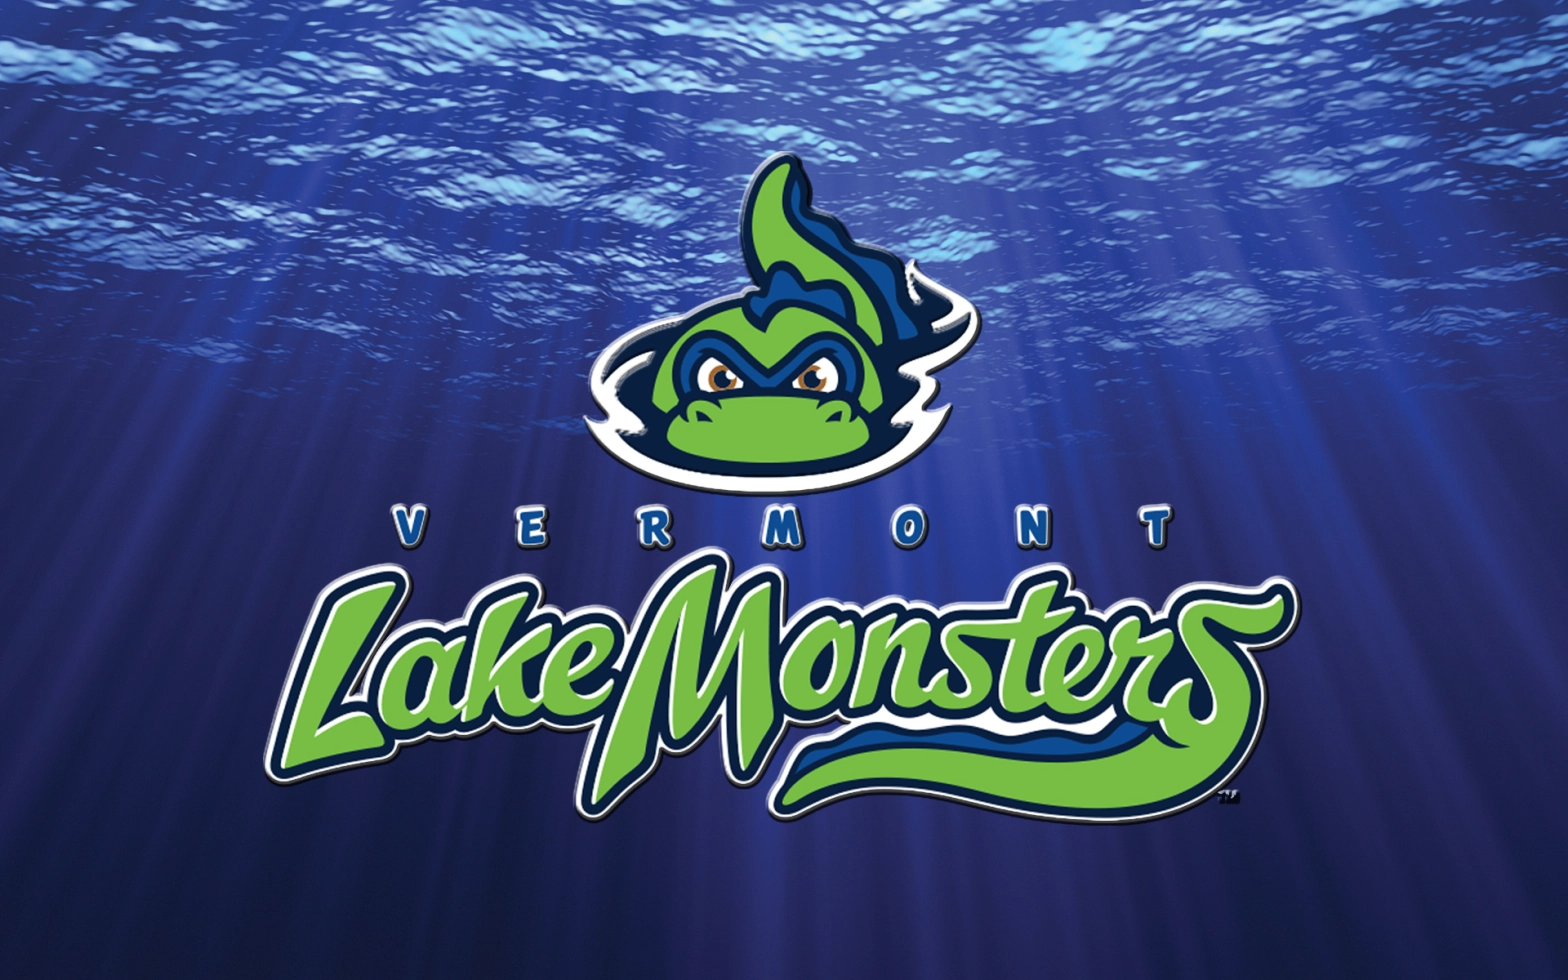 Baseball team logo with cartoon lake monster